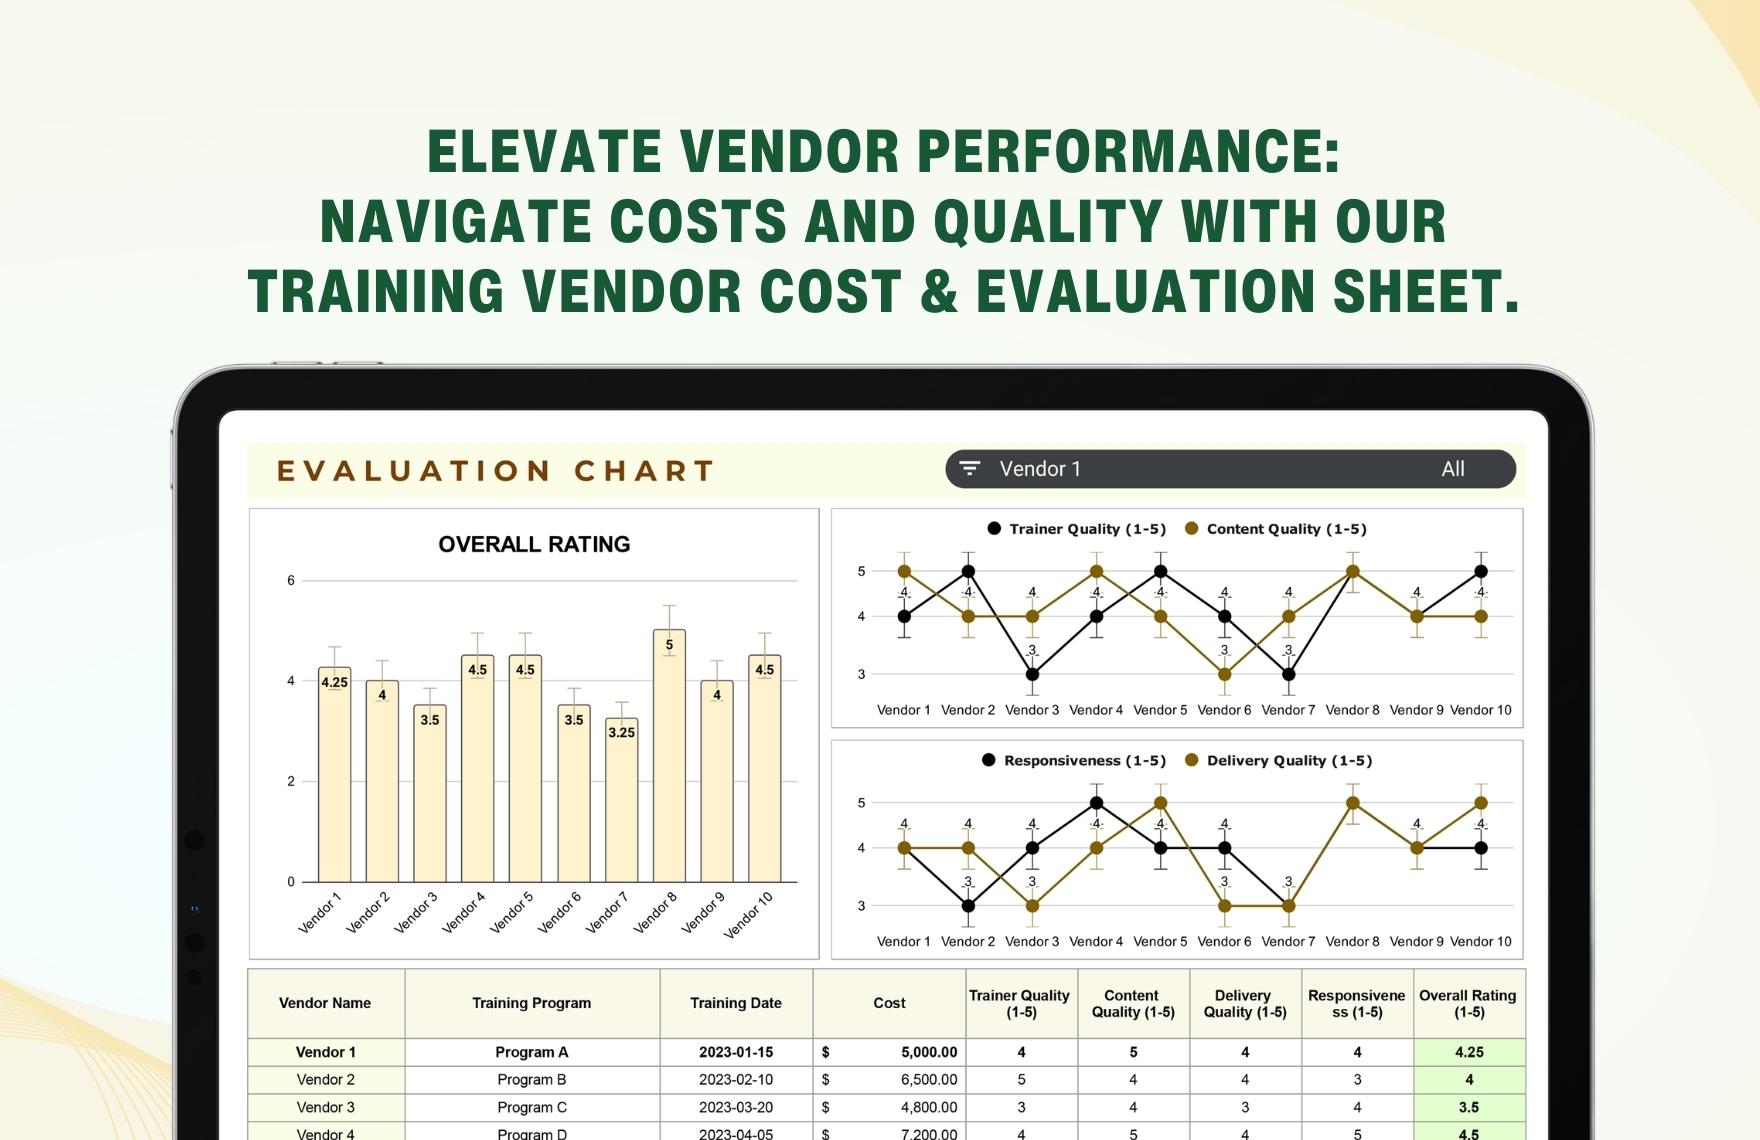 Training Vendor Cost & Evaluation Sheet HR Template